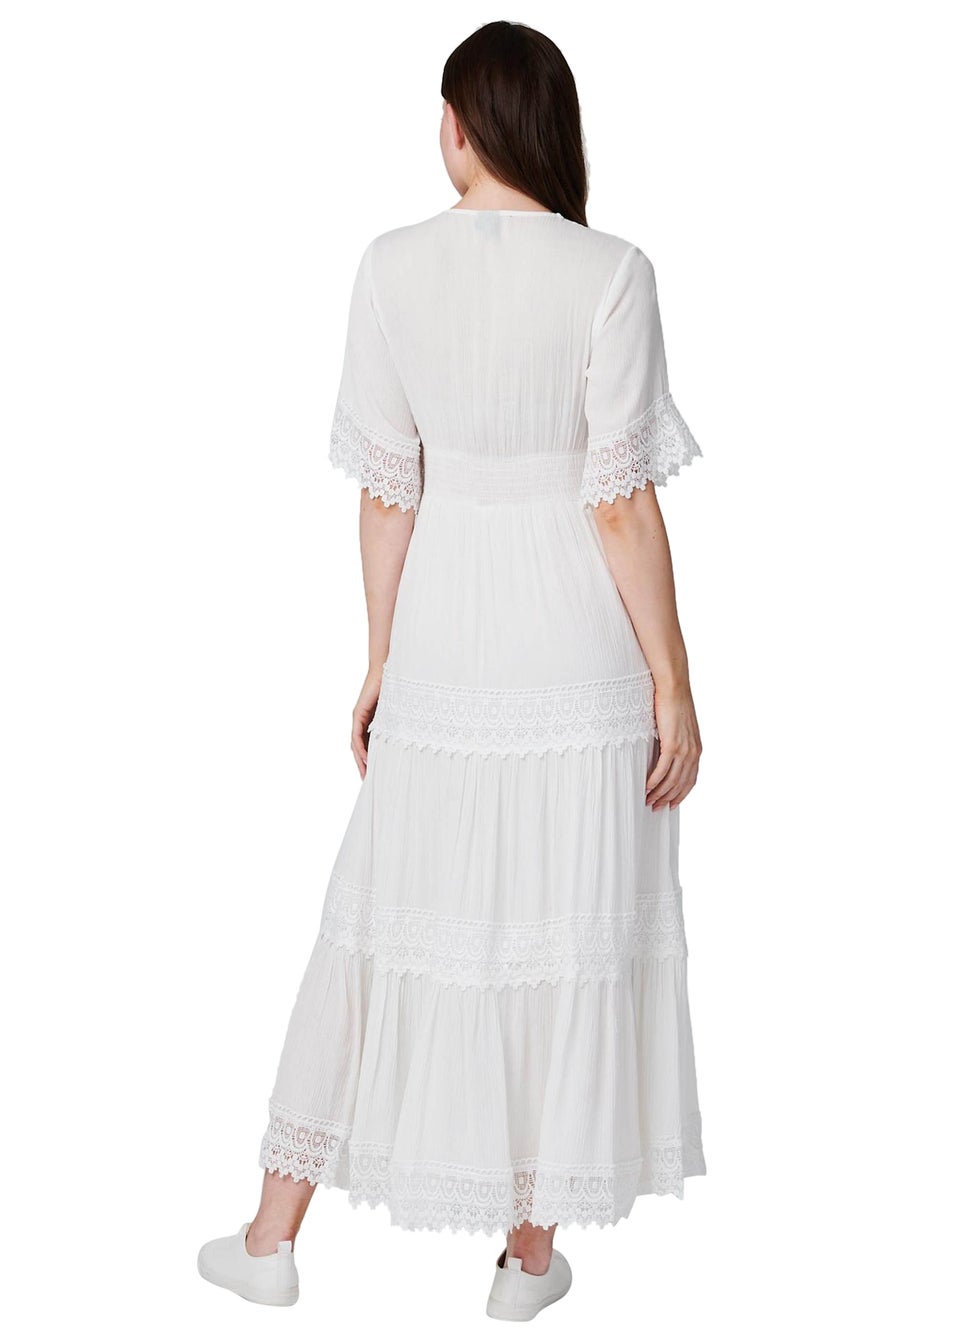 Izabel London White Short Sleeve Crochet Maxi Dress